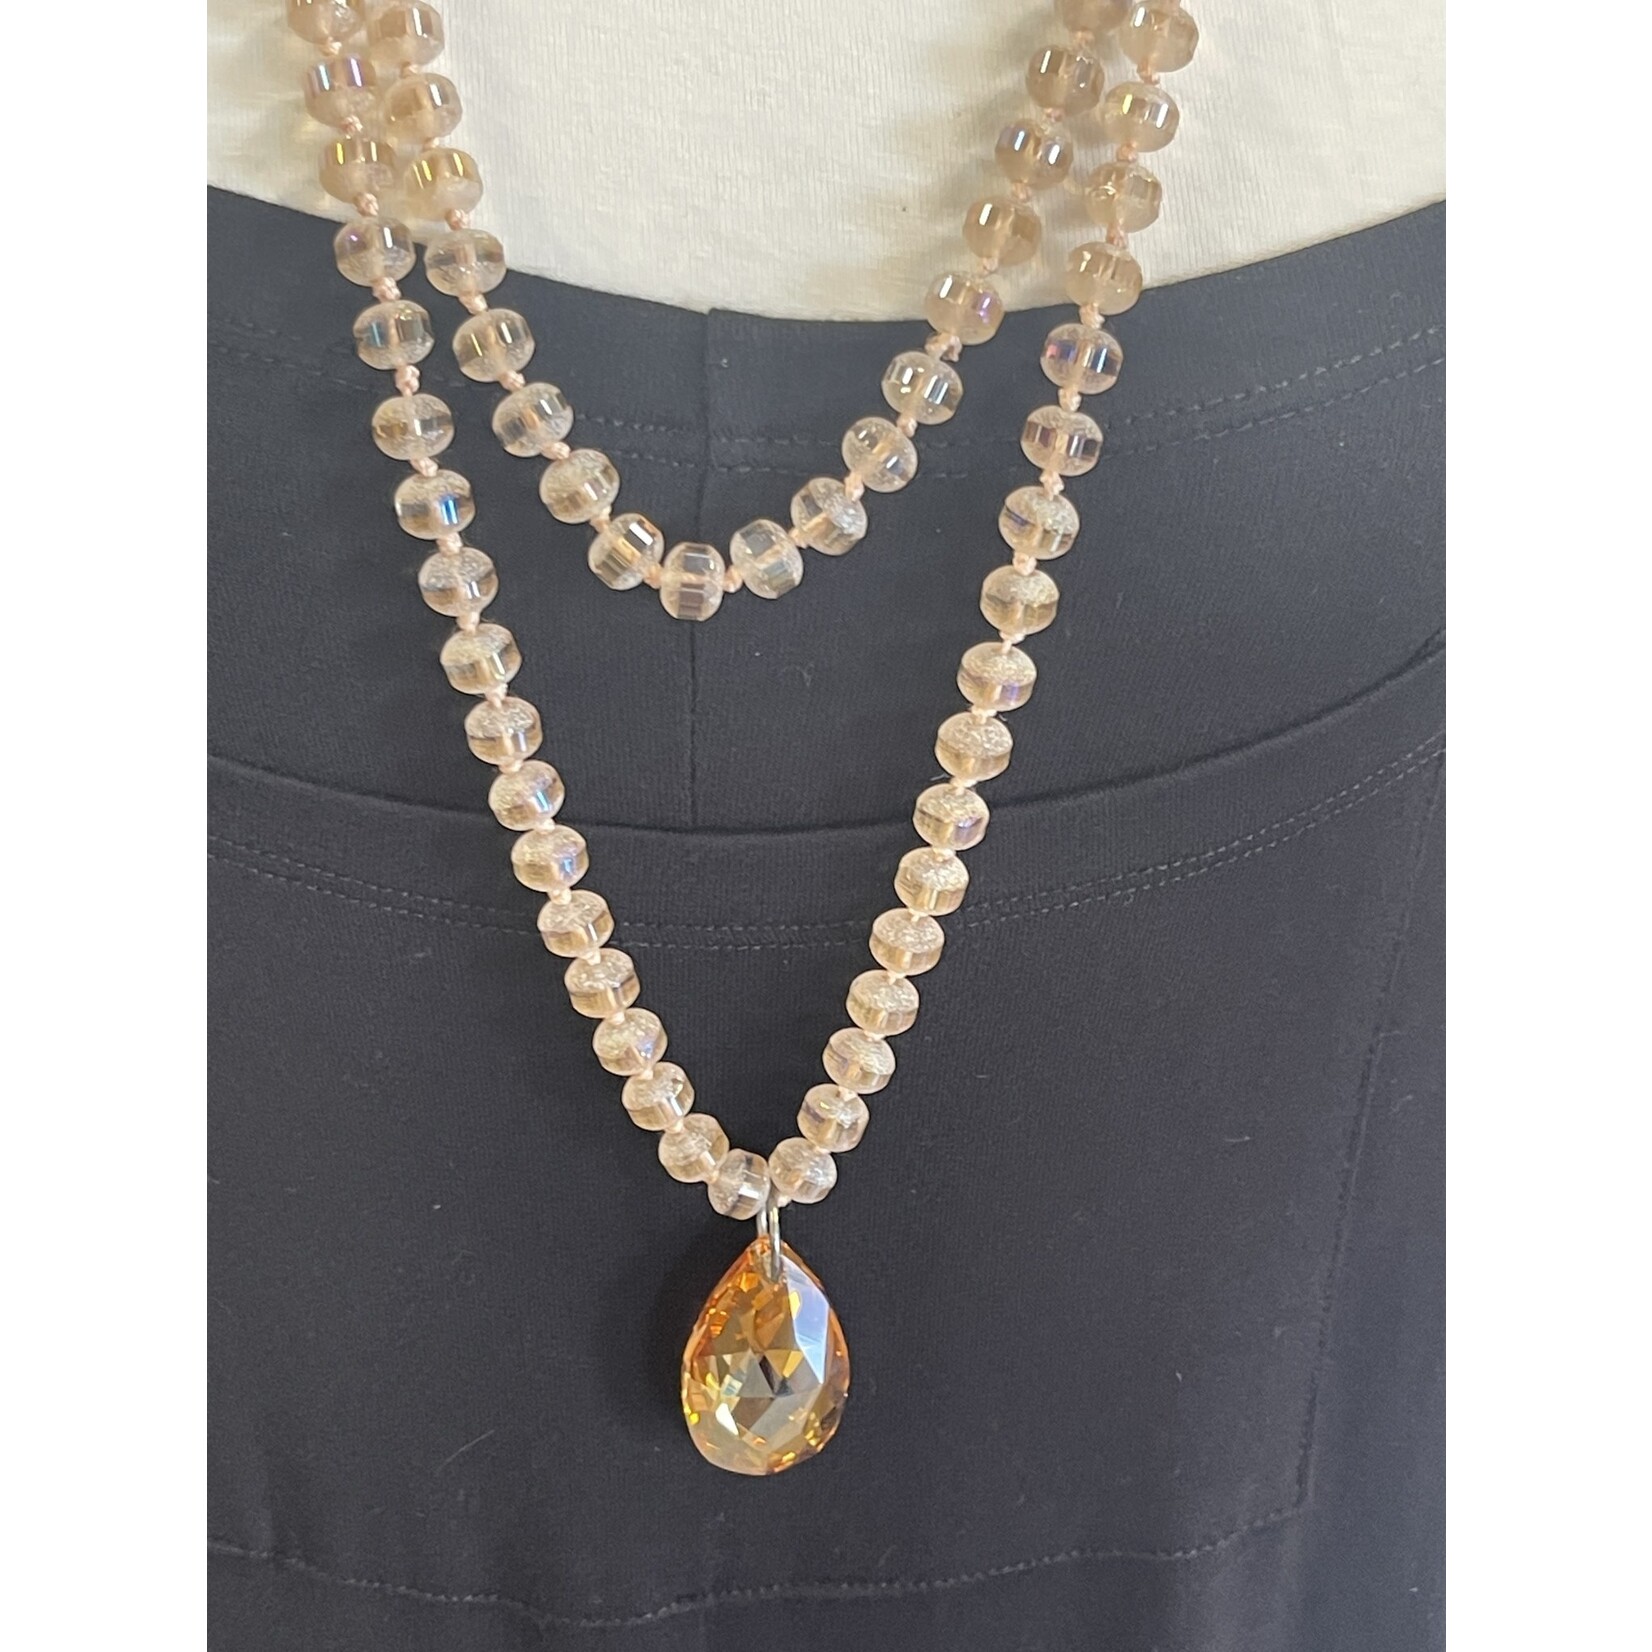 Summer Renee Jewelry HANDMADE Stunning Bead and Gem Necklace 64"